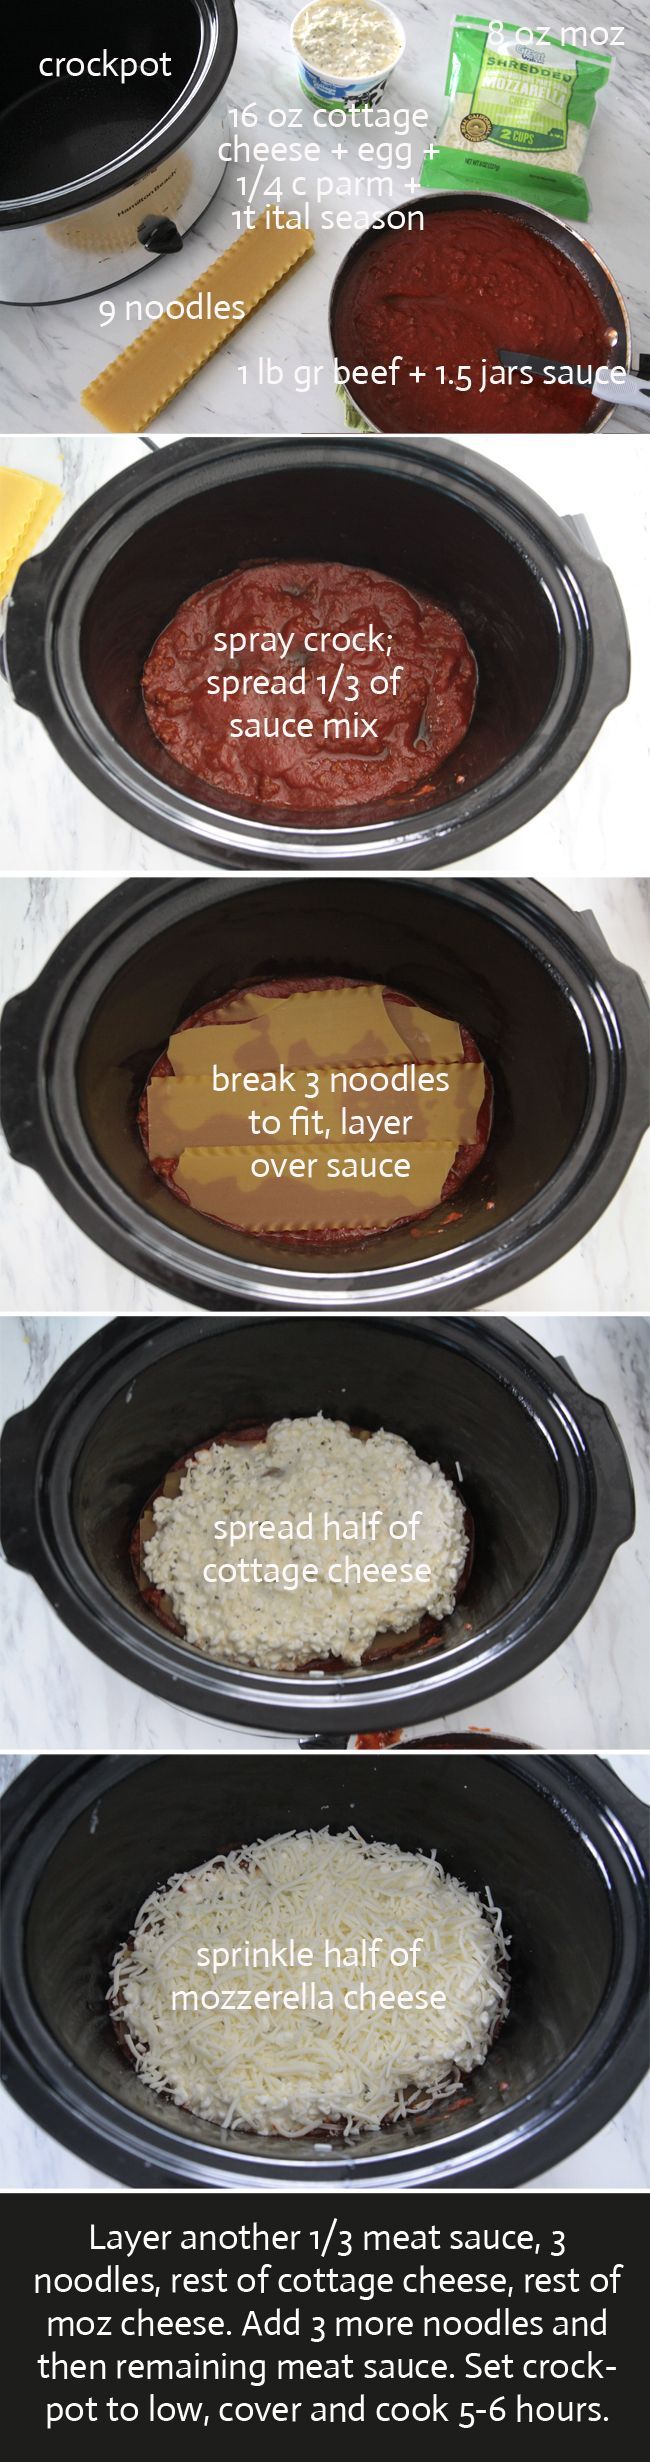 Crockpot Lasagne Recipe ~ this reci